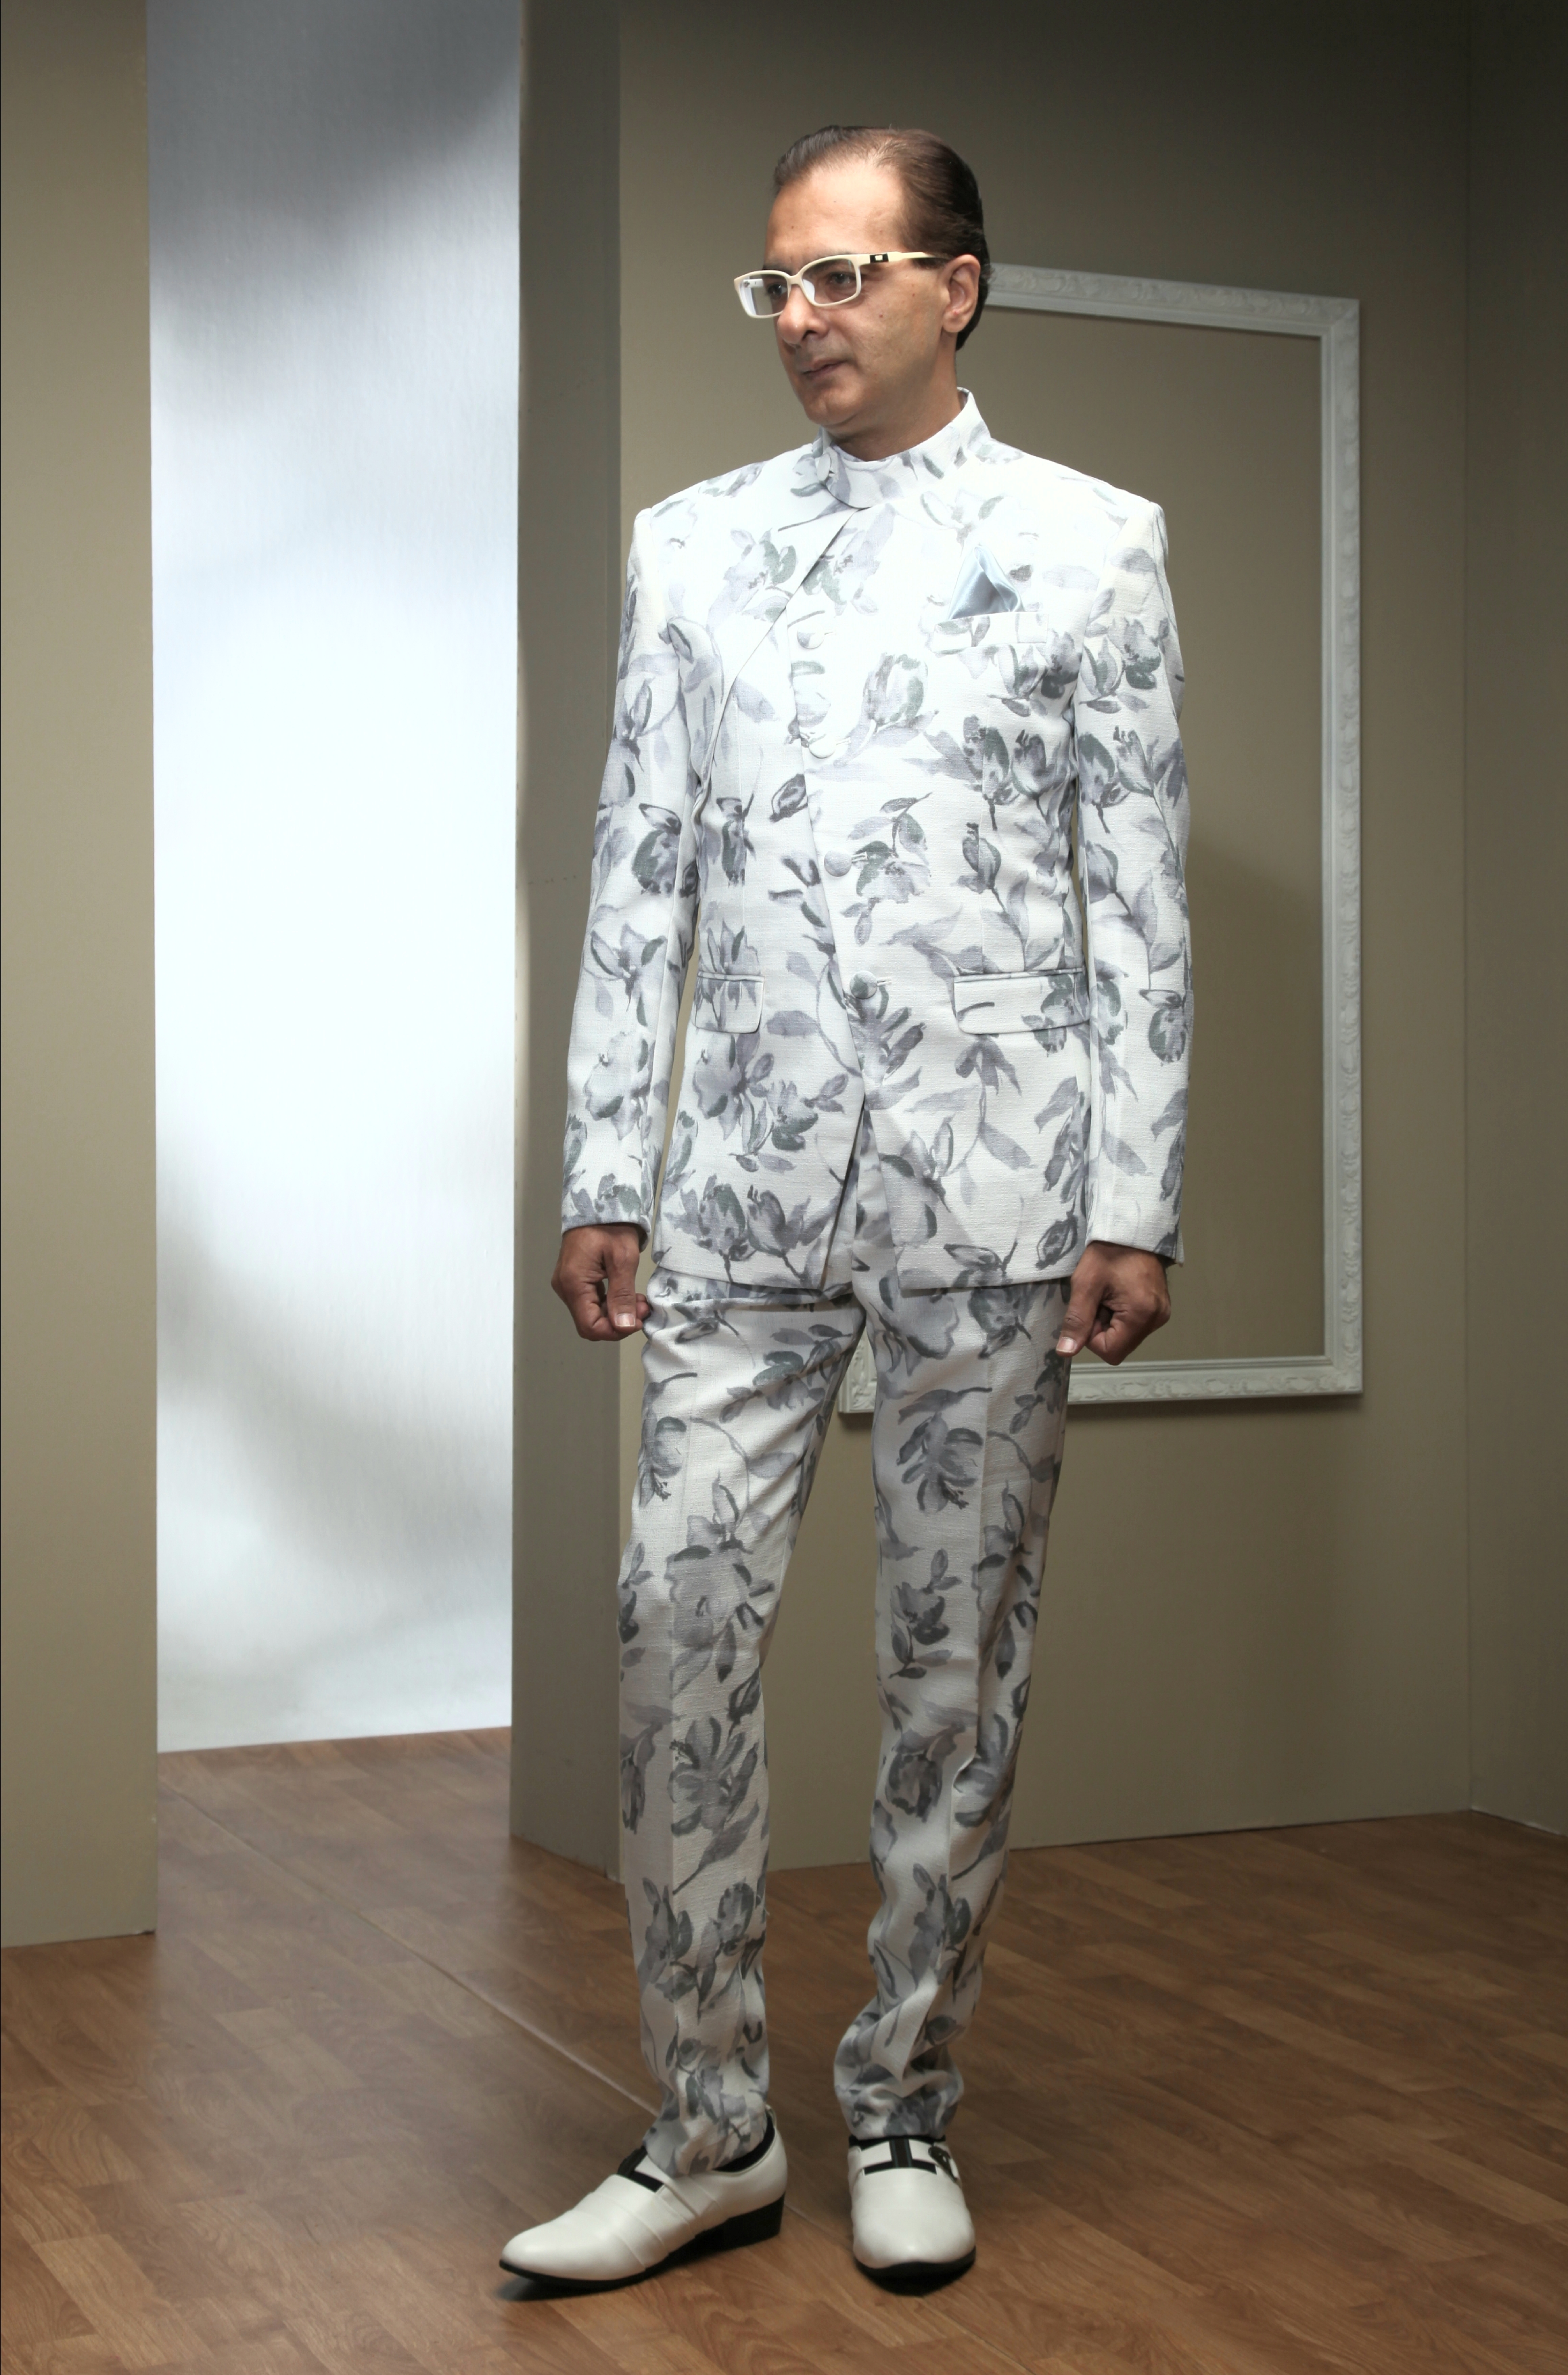 Suit Rental Suits Rent Hire Designer My Singapore Tailor Tailors Rentals Shop Tuxedo Black Tie Wedding Formal 34